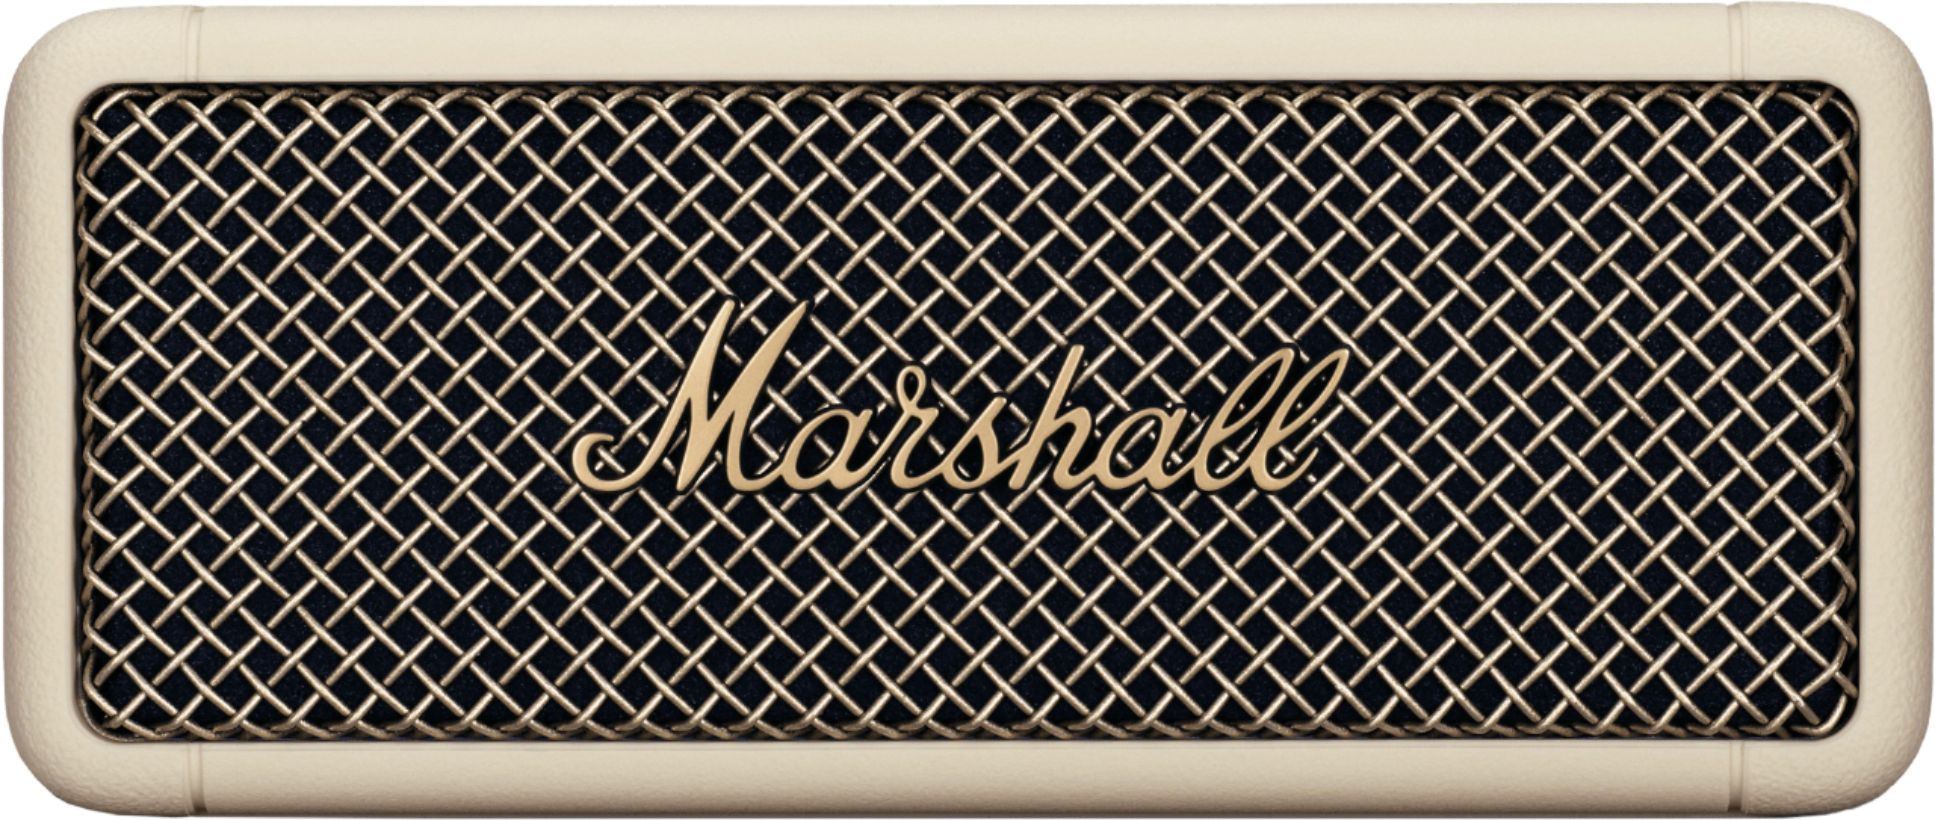 Marshall Emberton Portable Bluetooth Speaker Cream 1005945 - Best Buy | Best Buy U.S.